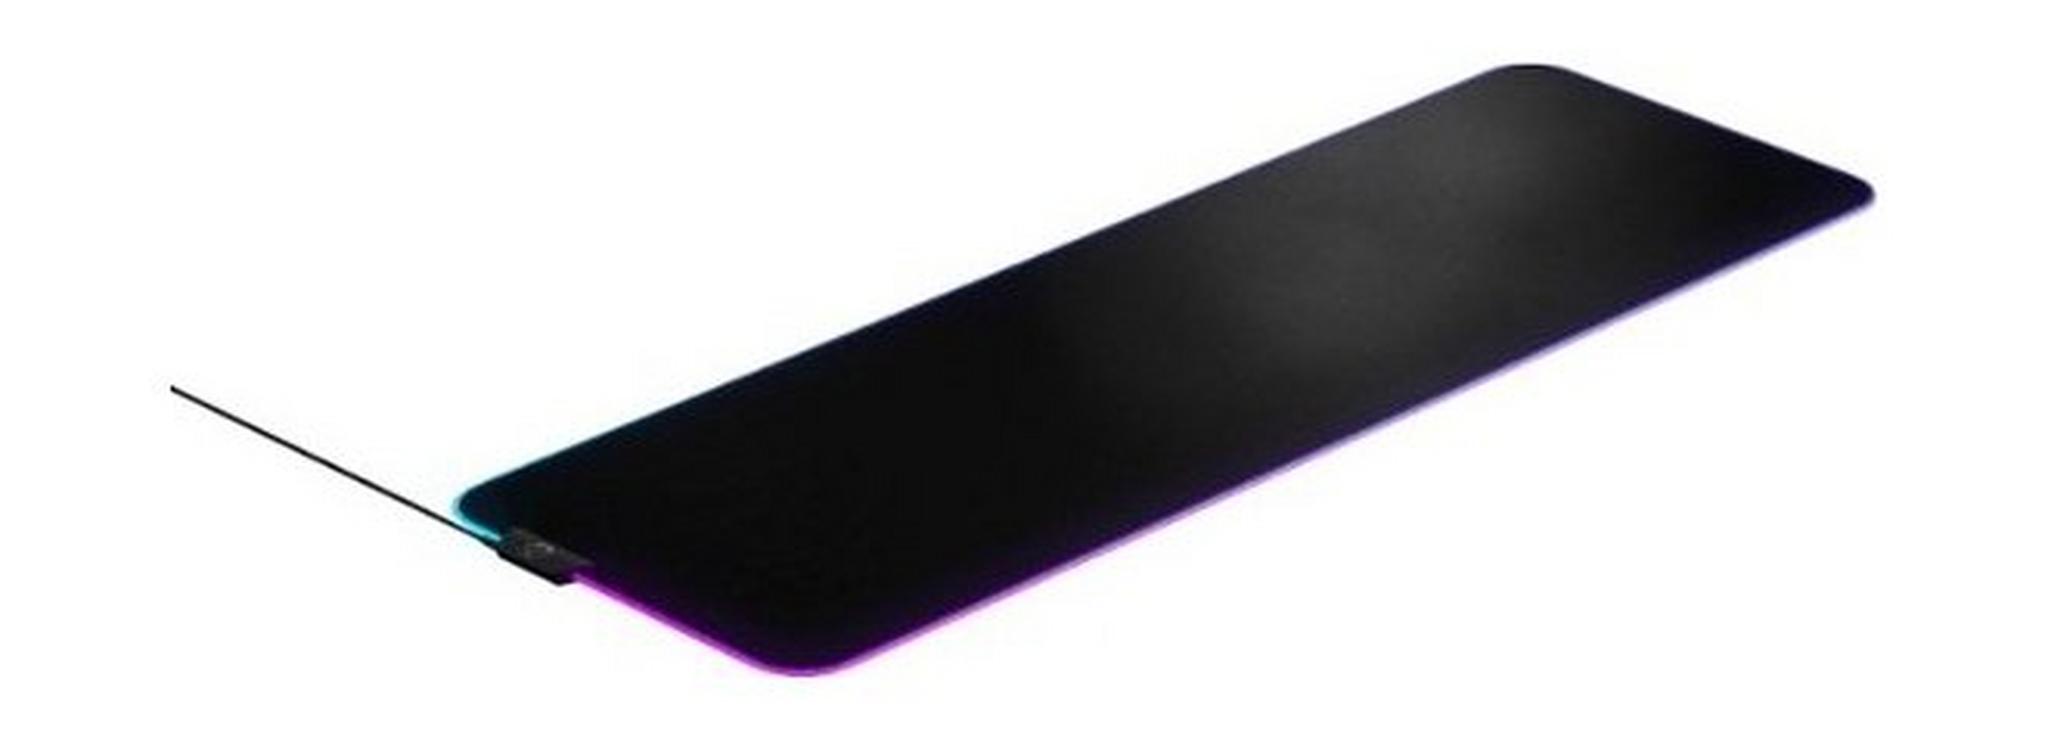 SteelSeries QcK Prism RGB Mousepad - XL